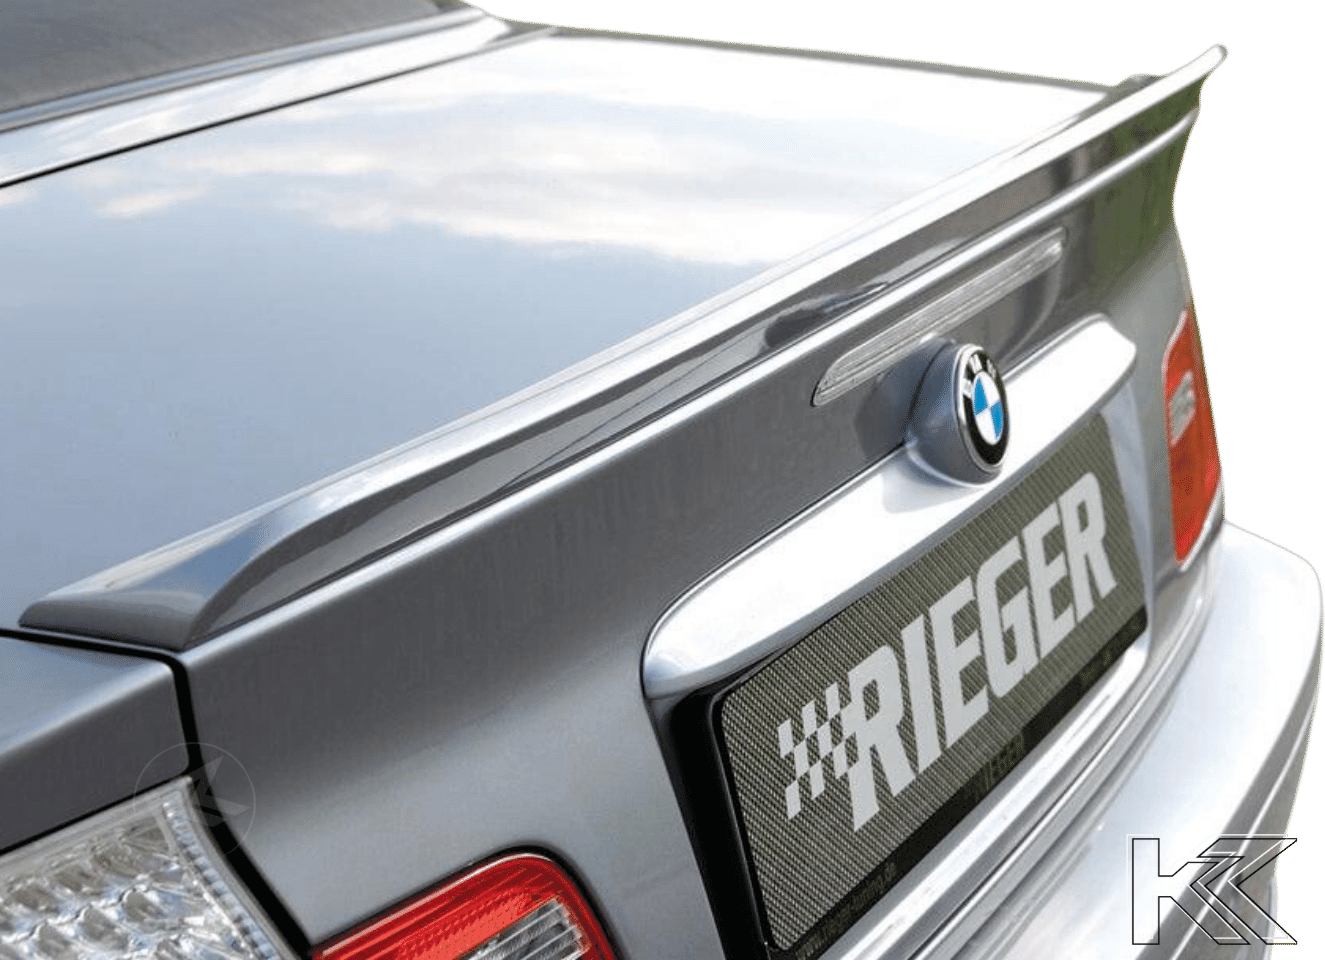 Rieger BMW E46 Convertible Rear Flap Spoiler - K2 Industries